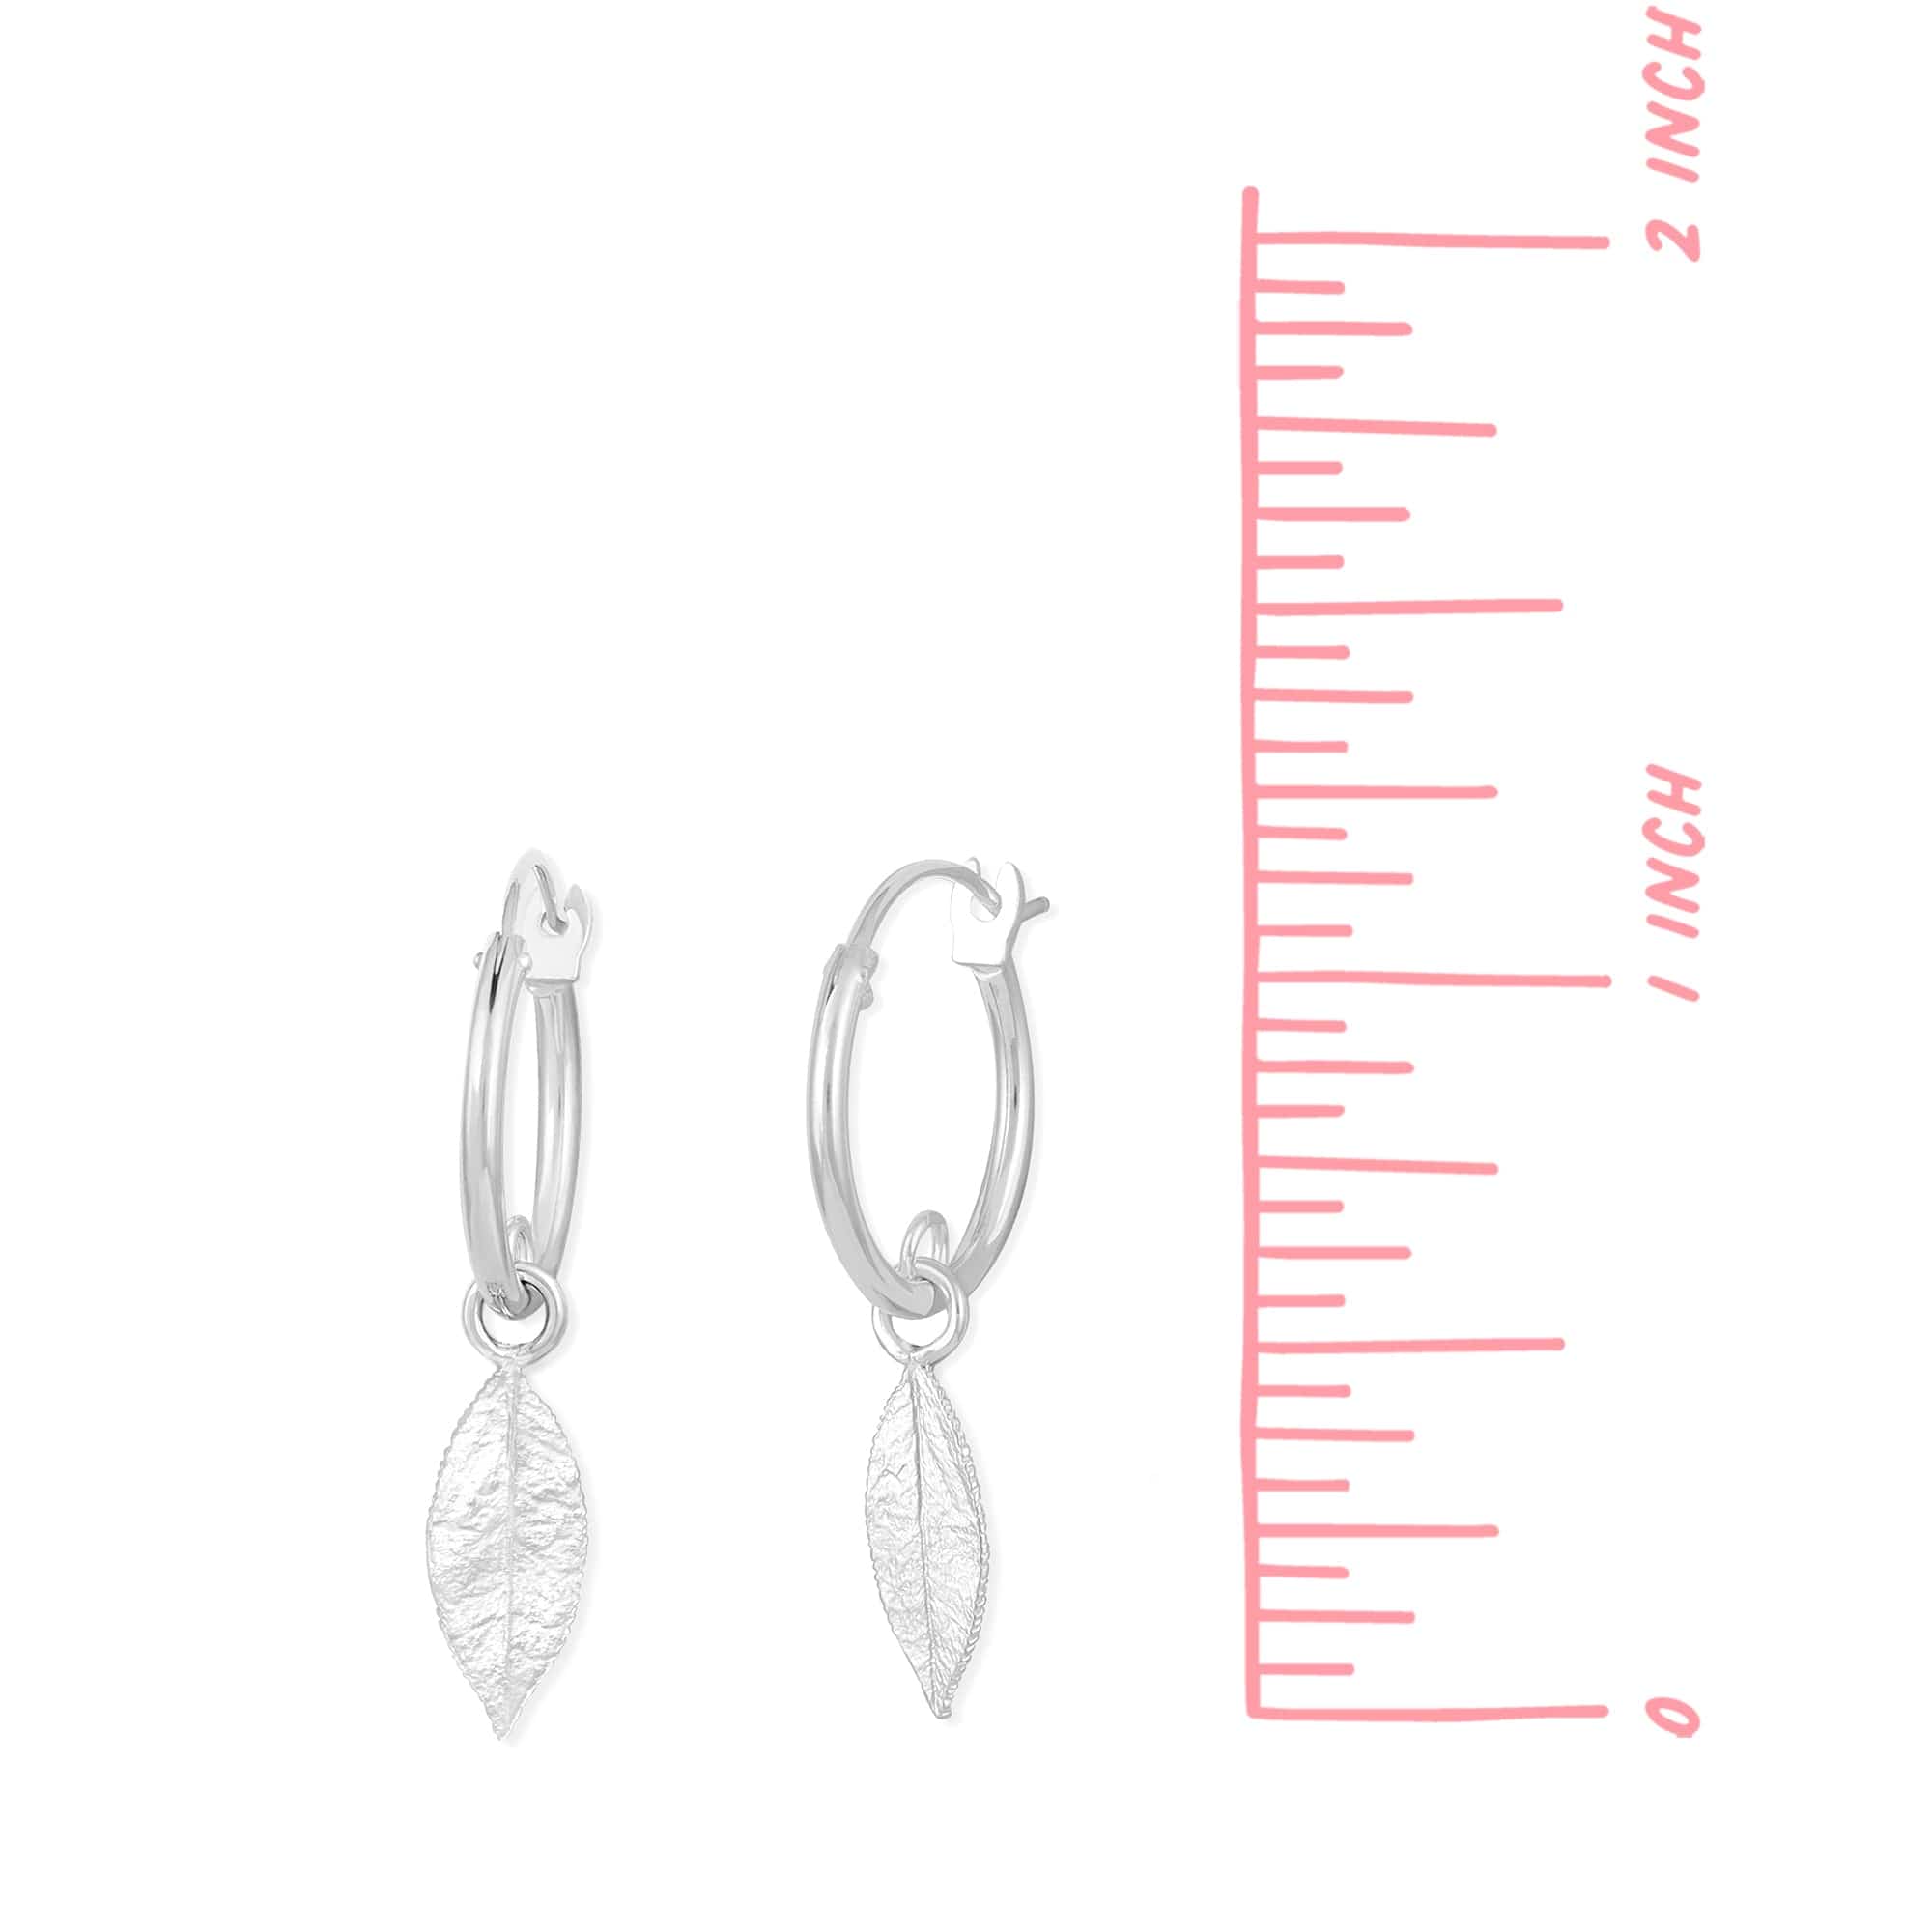 Boma Jewelry Earrings Textured Leaf Hoops